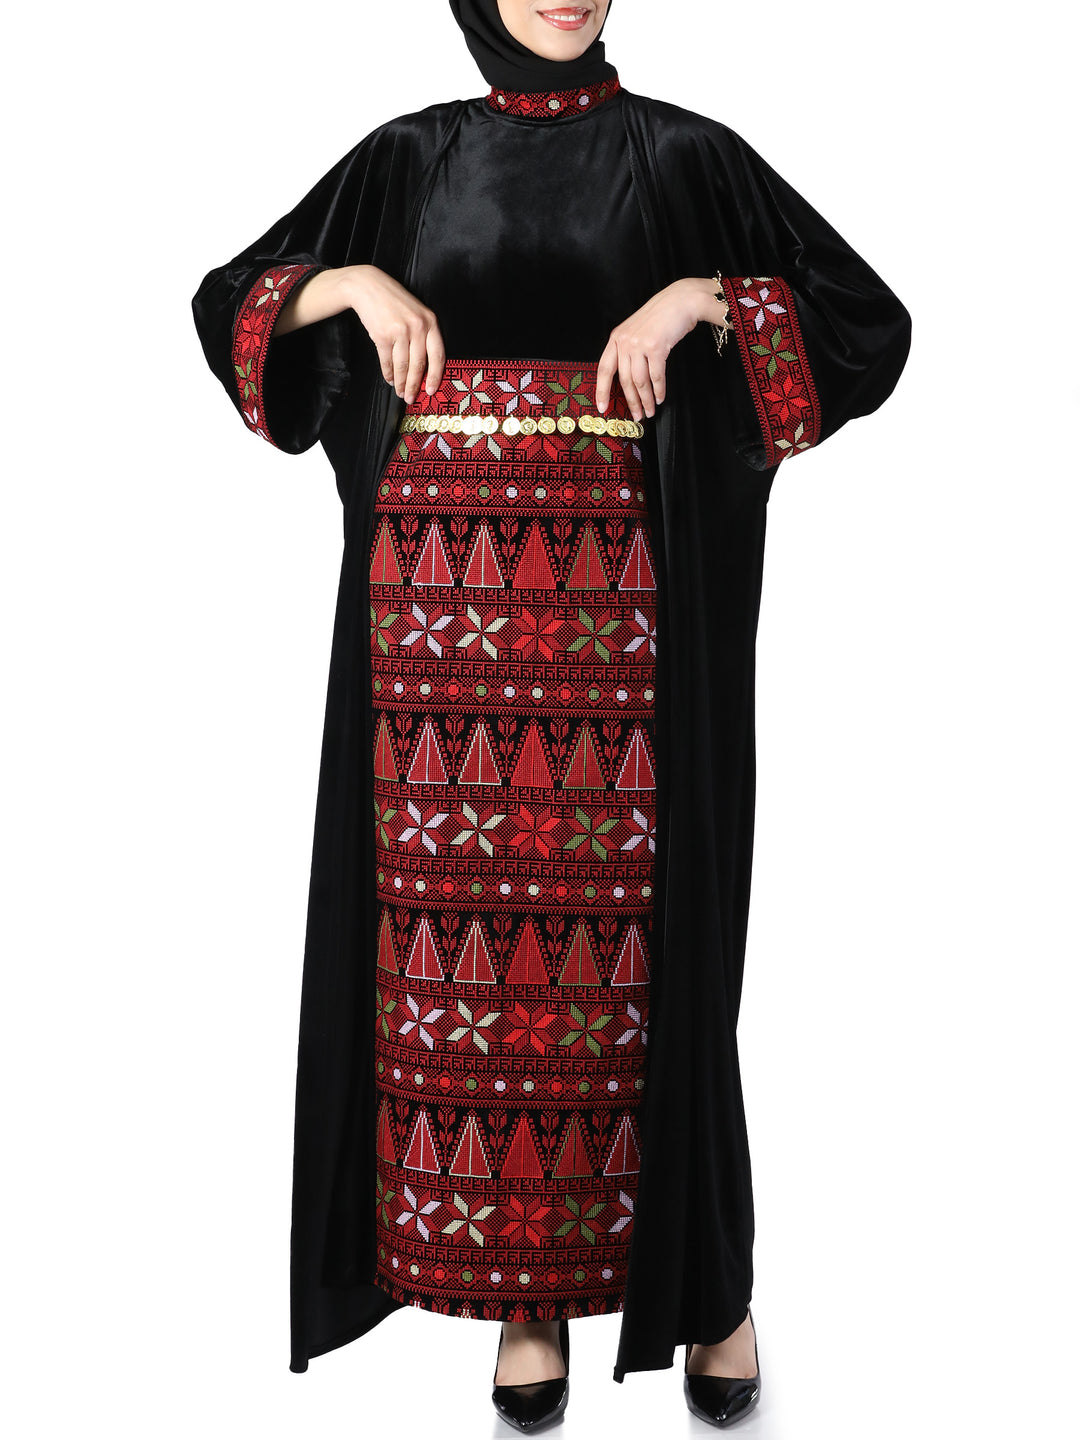 Jerusalem Velvet Bisht - 2 Piece High Quality Traditional Embroidered Palestinian Bisht